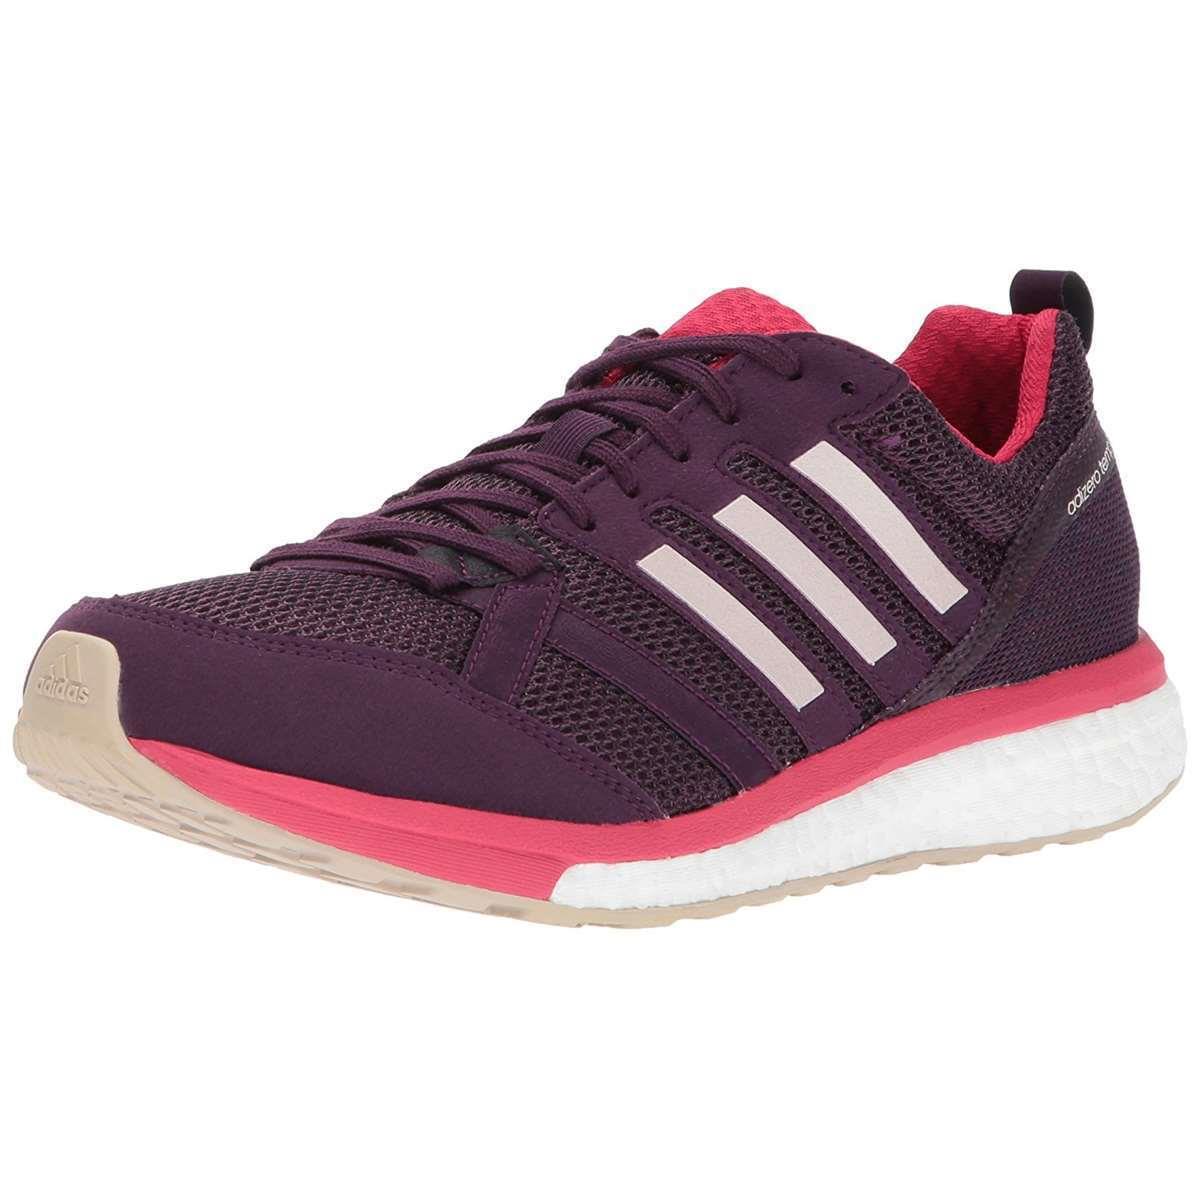 Adidas Women Adizero Tempo 9 Running Training Shoes Sneakers Red Night